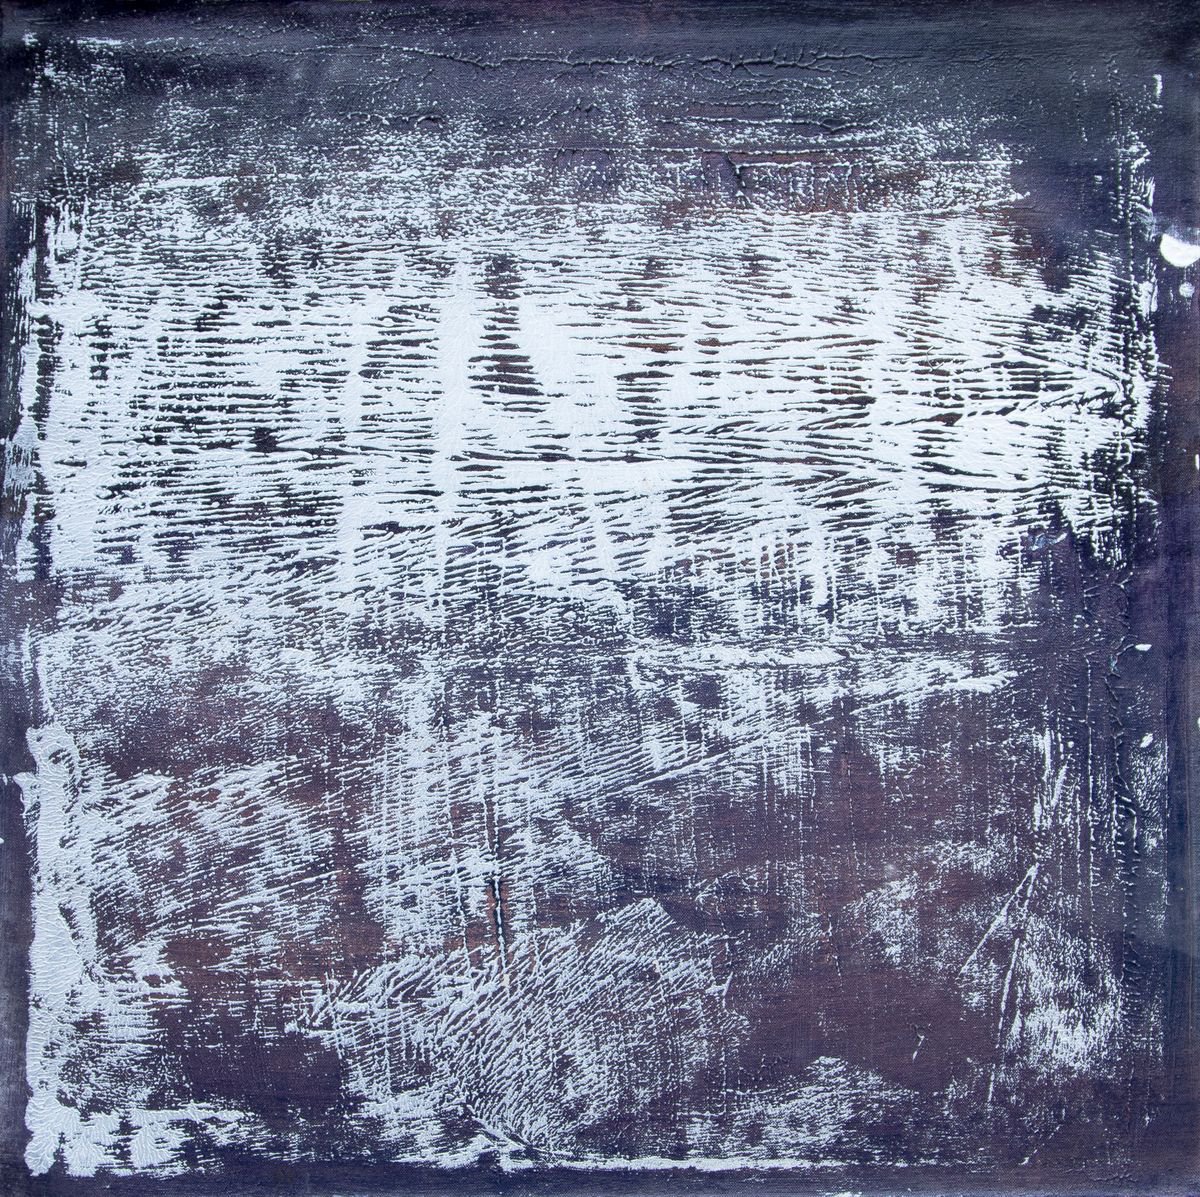 No. 286 (67x67 cm) by Rokas Berziunas